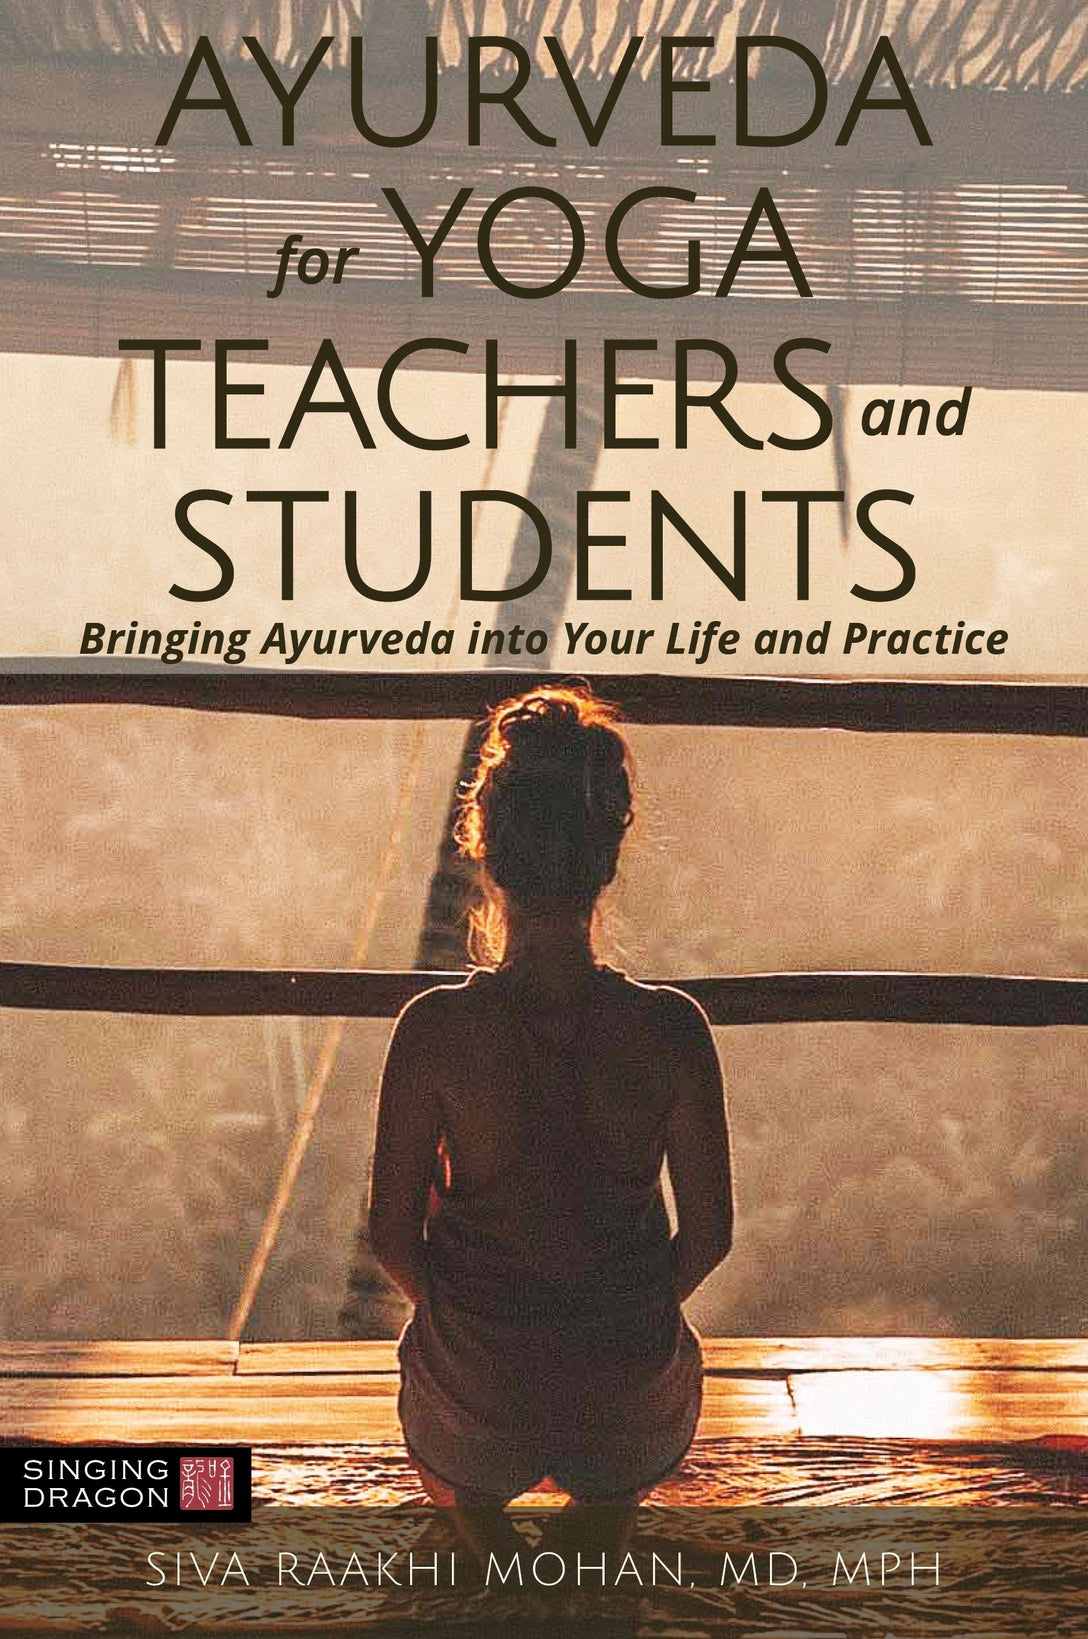 Ayurveda for Yoga Teachers and Students by Siva Raakhi Mohan